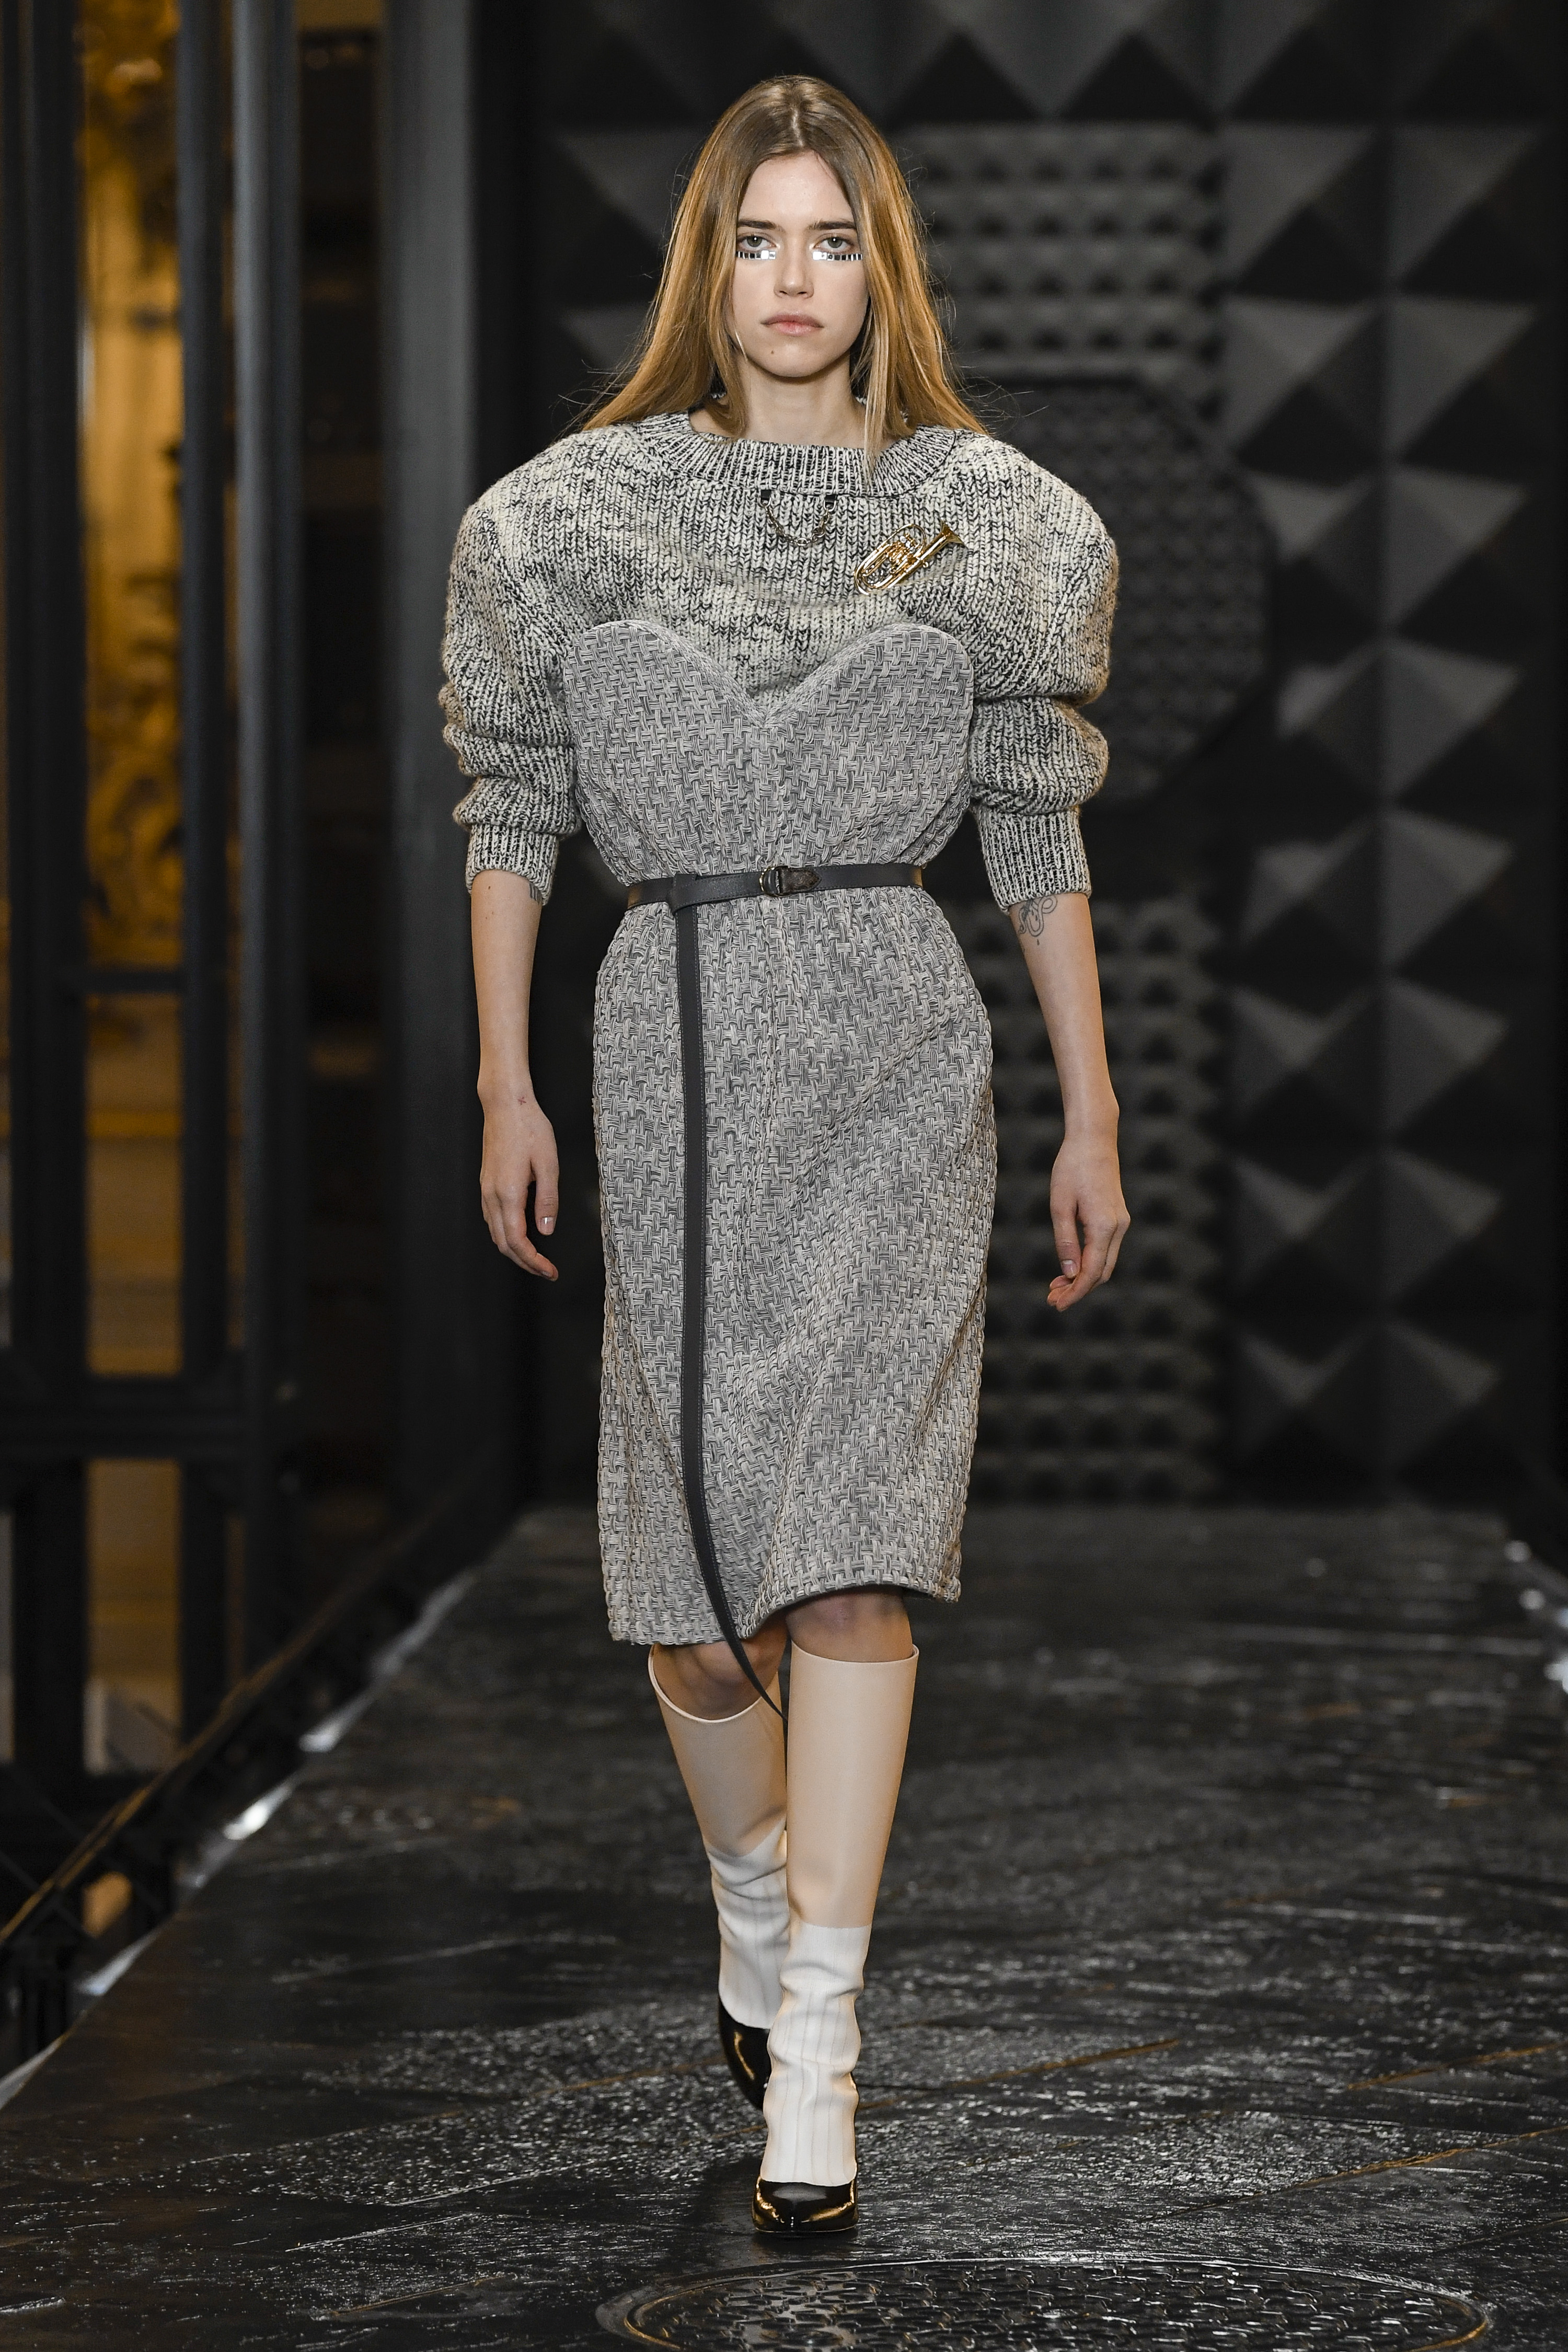 Rosalia performs in Louis Vuitton catwalk show at Paris Fashion